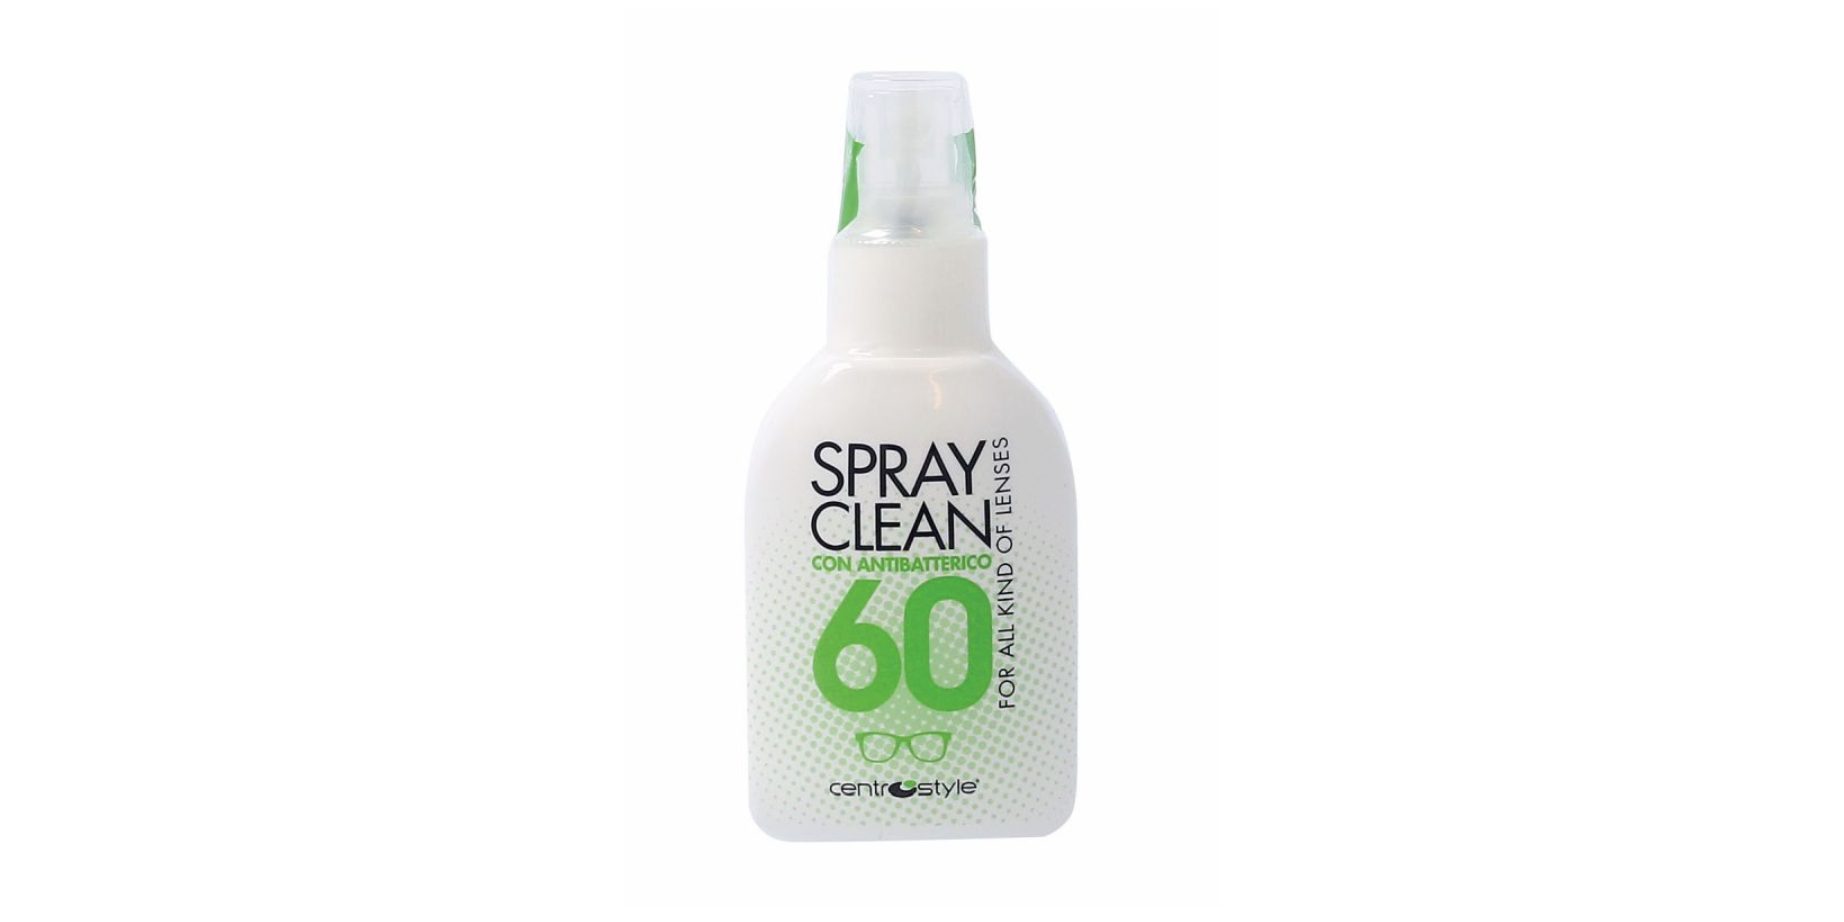 SPRAY CLEAN 60